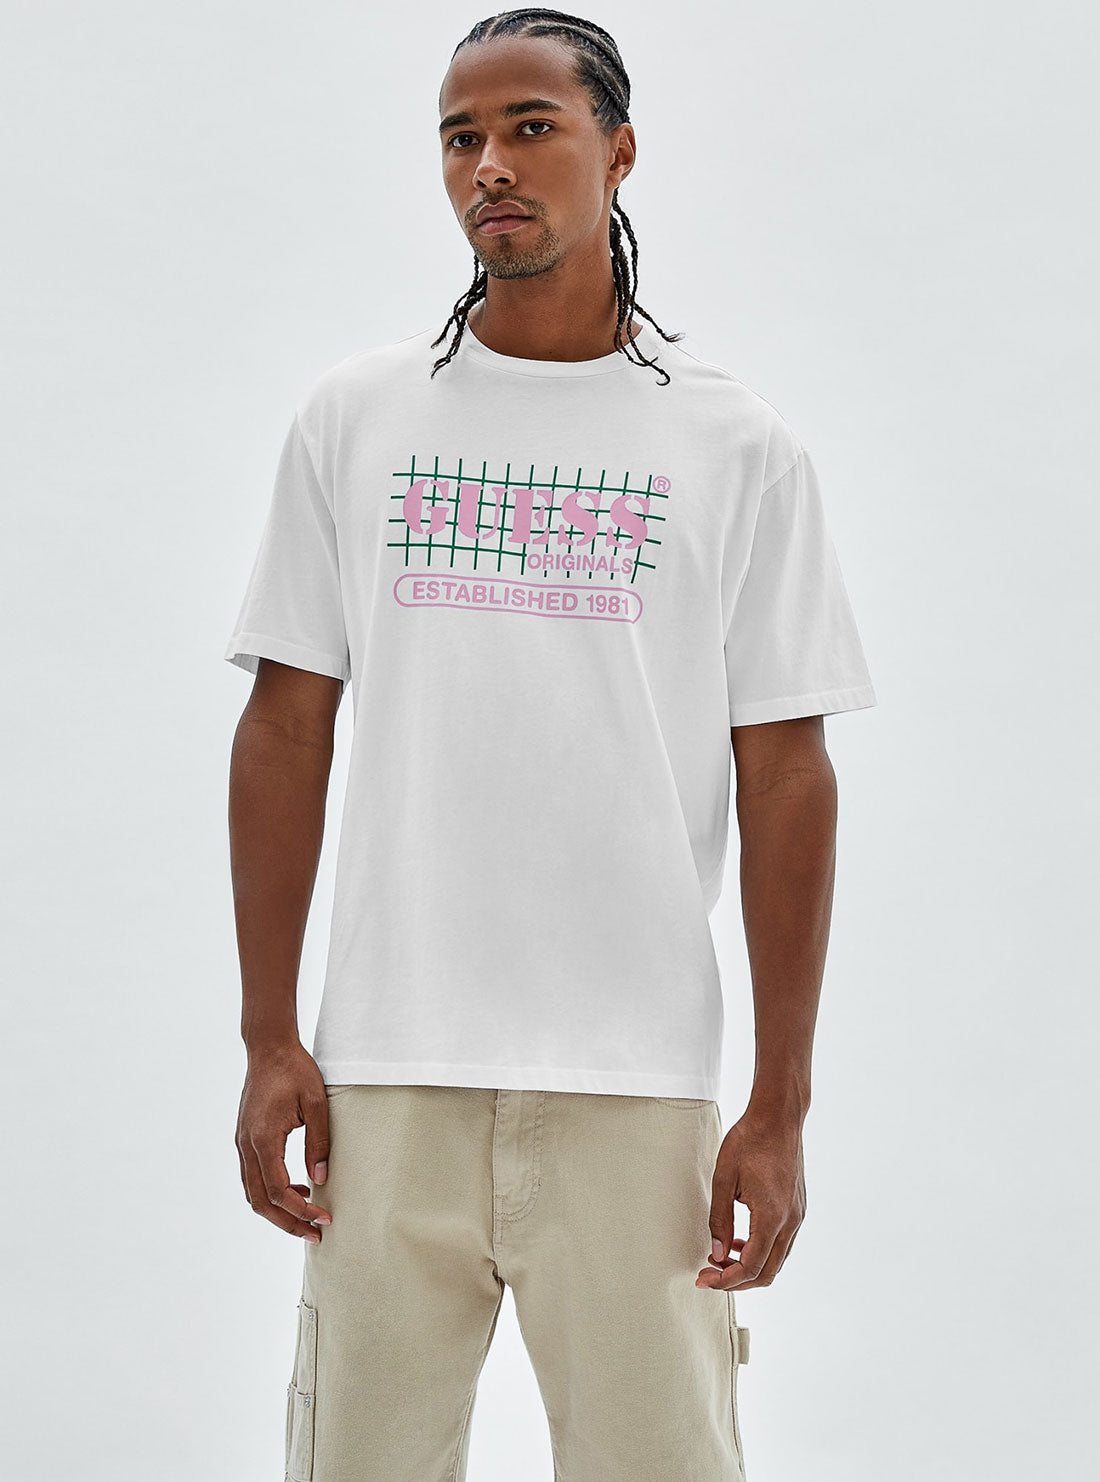 GUESS Men's Guess Originals White Grid Logo T-Shirt M1RI00K9Y40 Front View